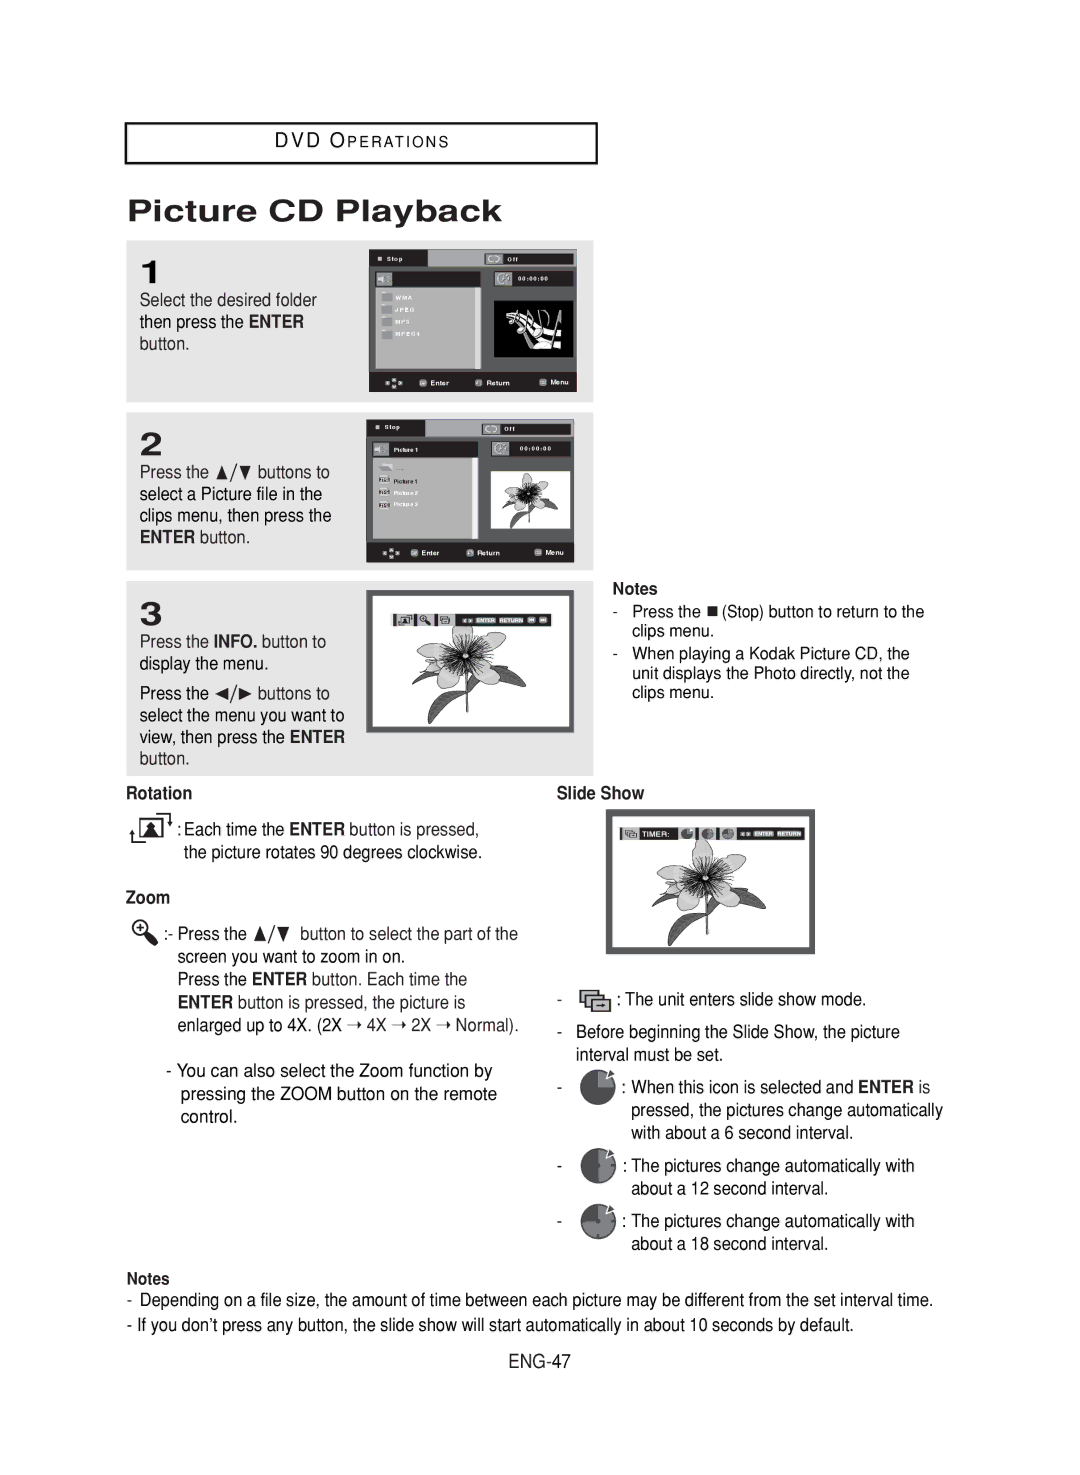 Samsung DVD-V9800 instruction manual Picture CD Playback, ENG-47, Rotation, Zoom, Slide Show 